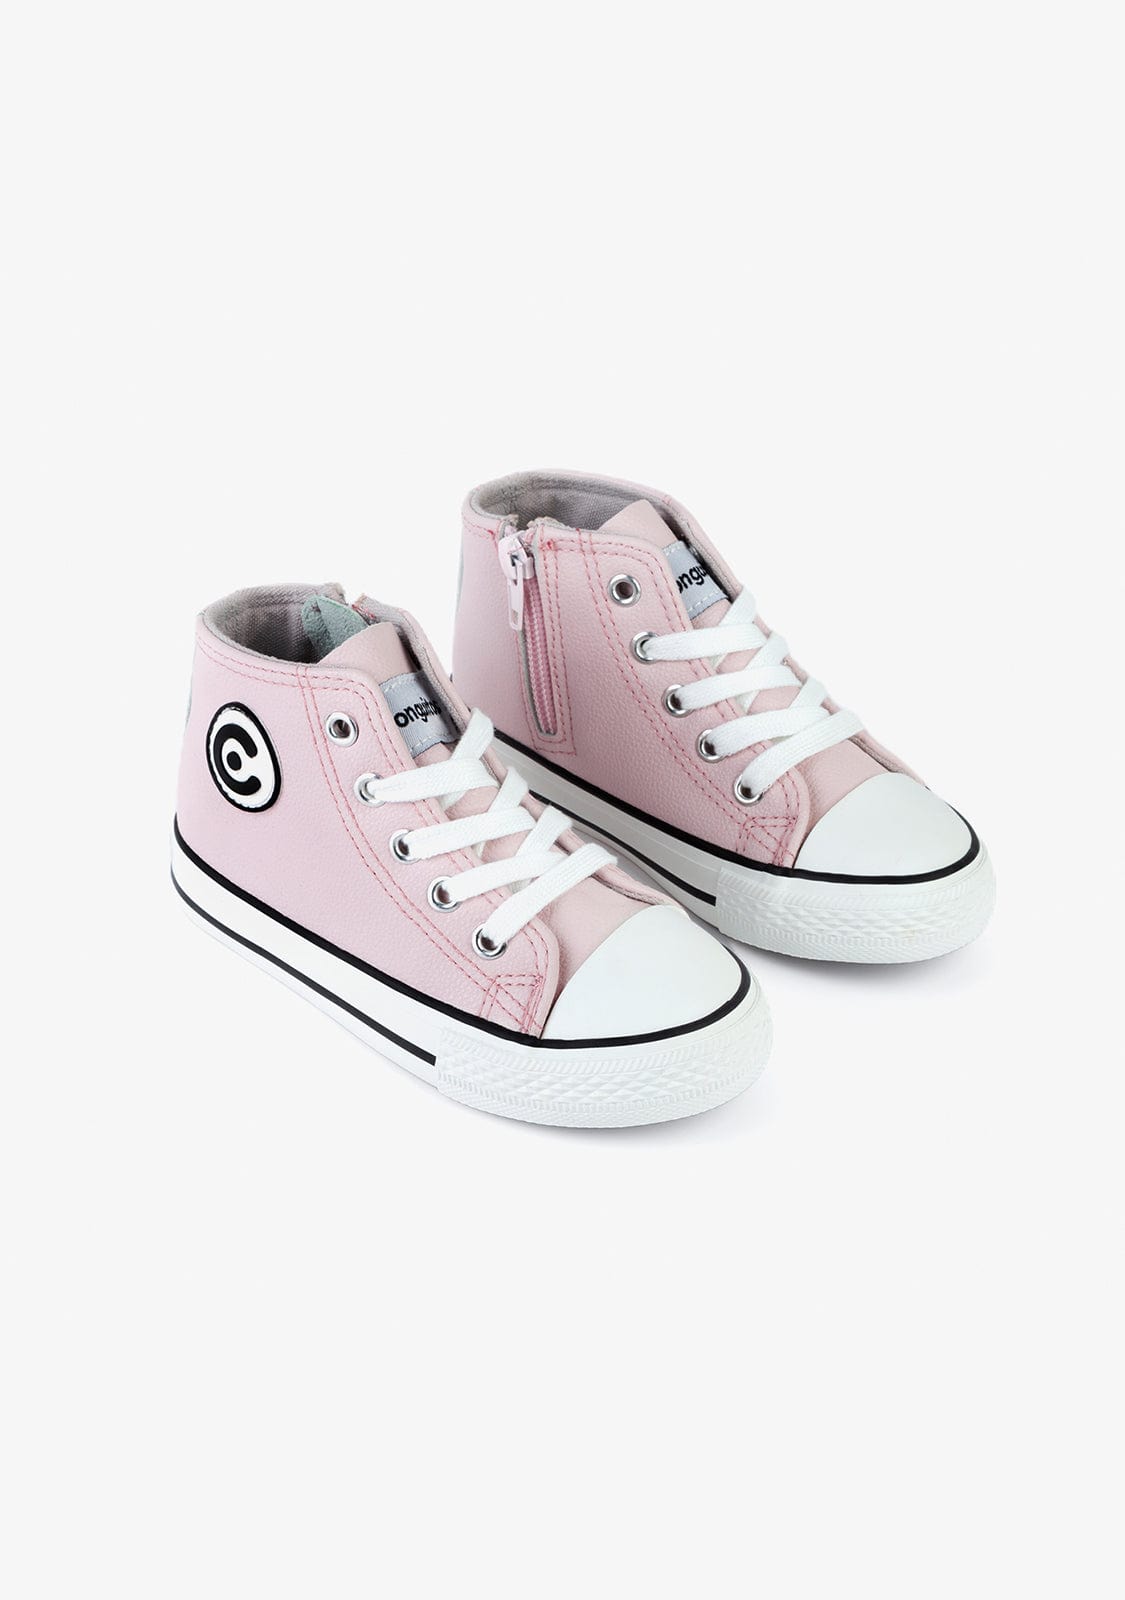 CONGUITOS Shoes Unisex Pink Hi-Top Sneakers Napa